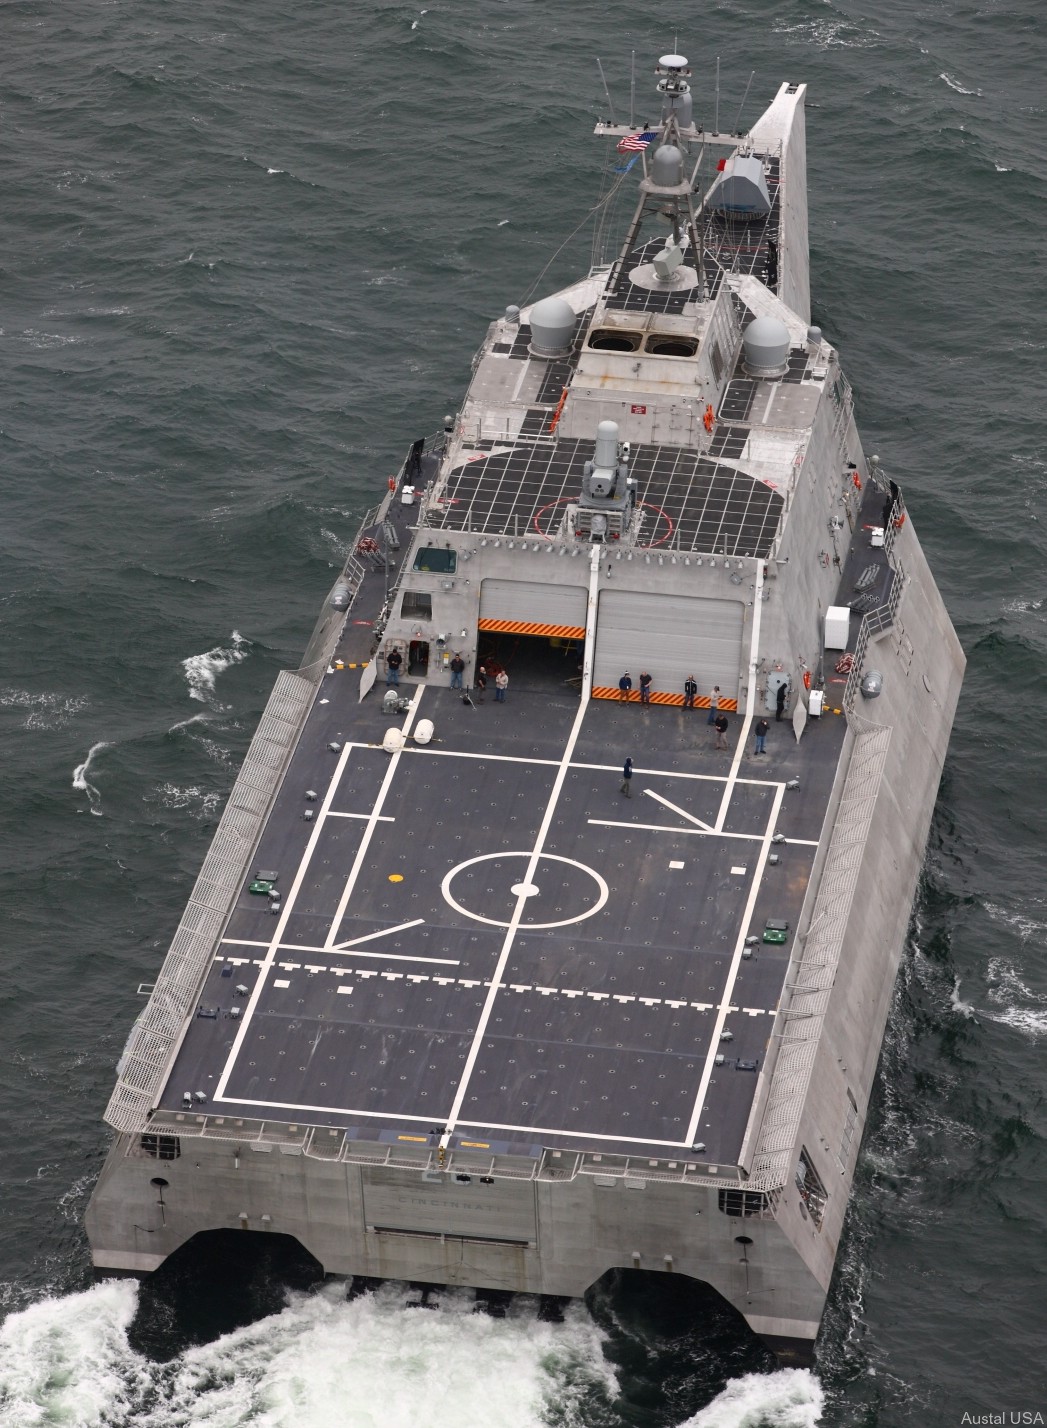 lcs-20 uss cincinnati independence class littoral combat ship us navy 19